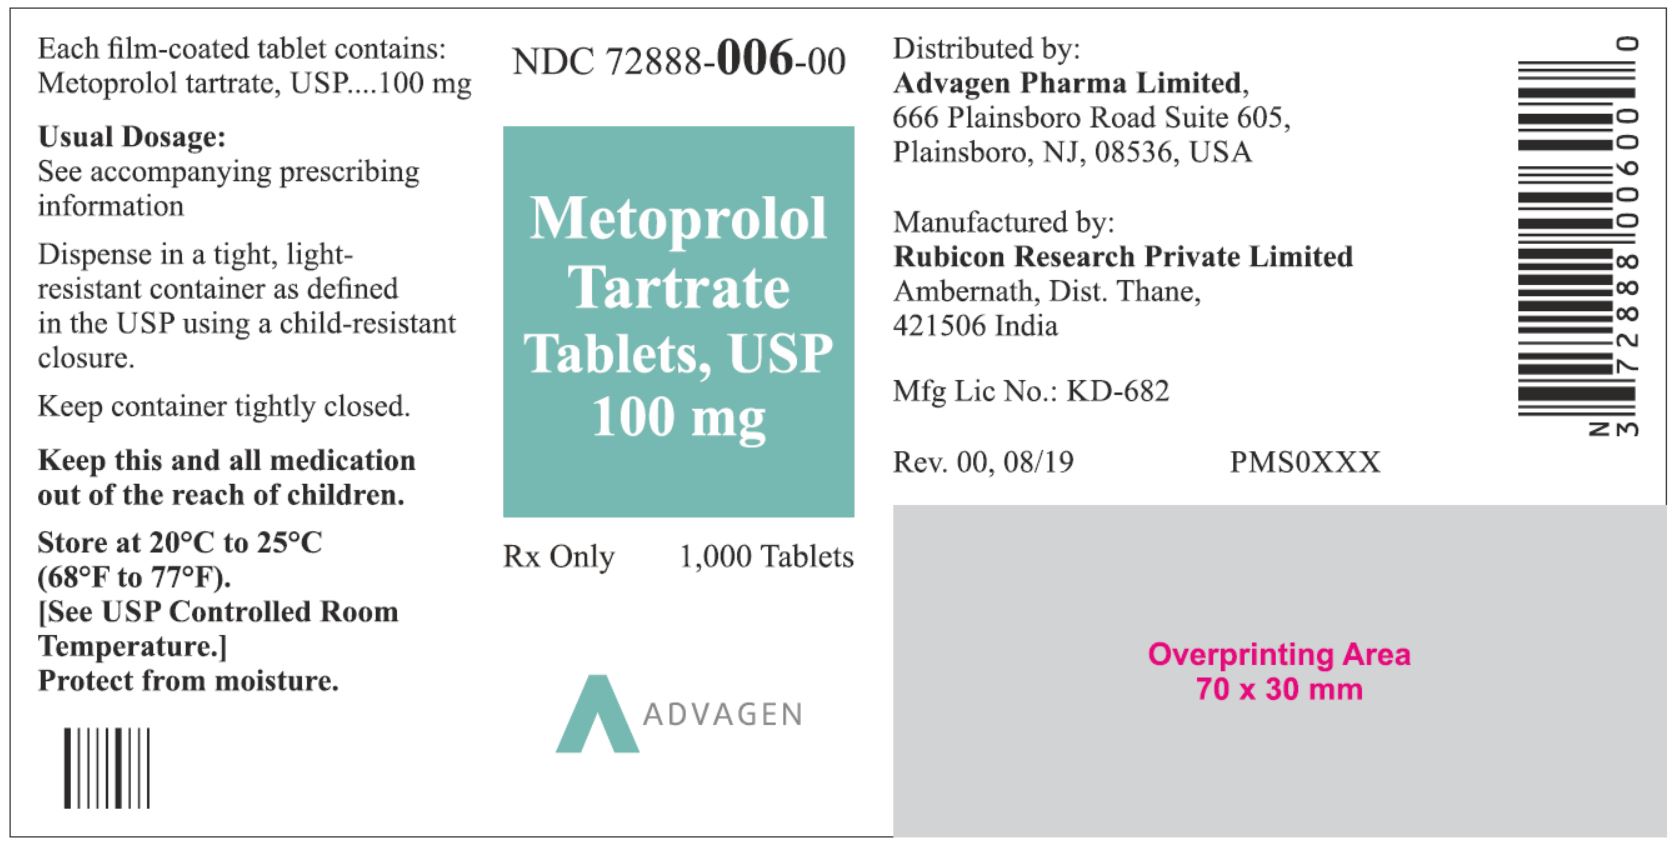 NDC: <a href=/NDC/72888-006-00>72888-006-00</a> - Metoprolol Tartrate Tablets, USP 100 mg - 1000 Tablets